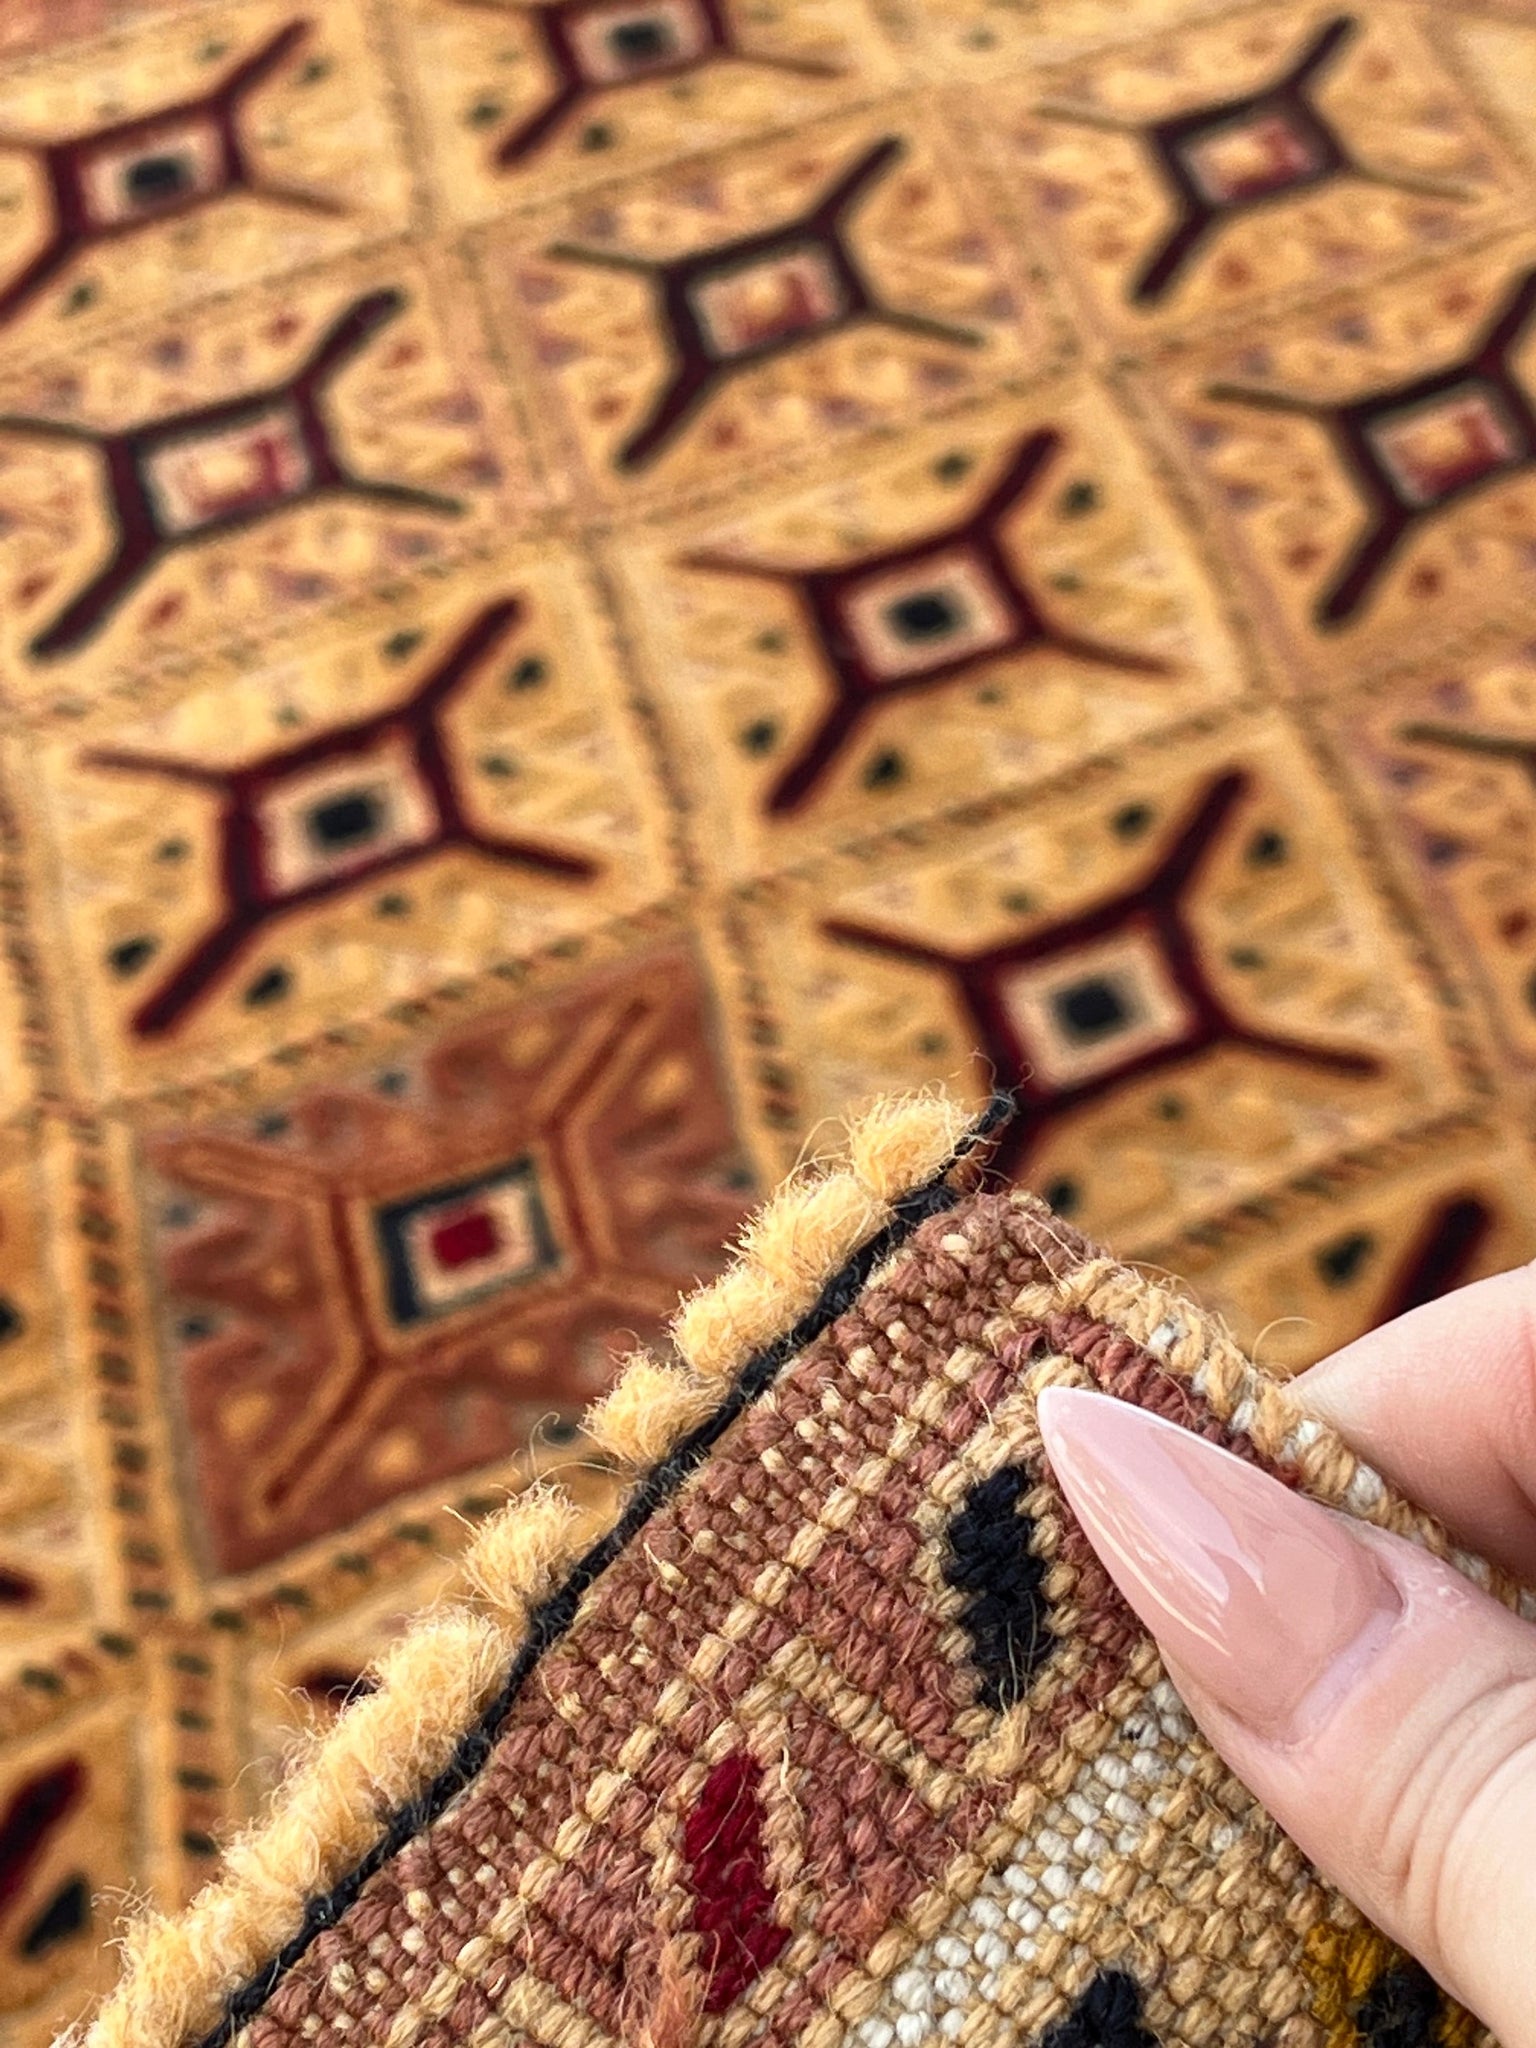 4x5 (150x120) Handmade Afghan Rug | Caramel Brown Crimson Red Black Olive Purple Ivory | Hand Knotted Persian Geometric